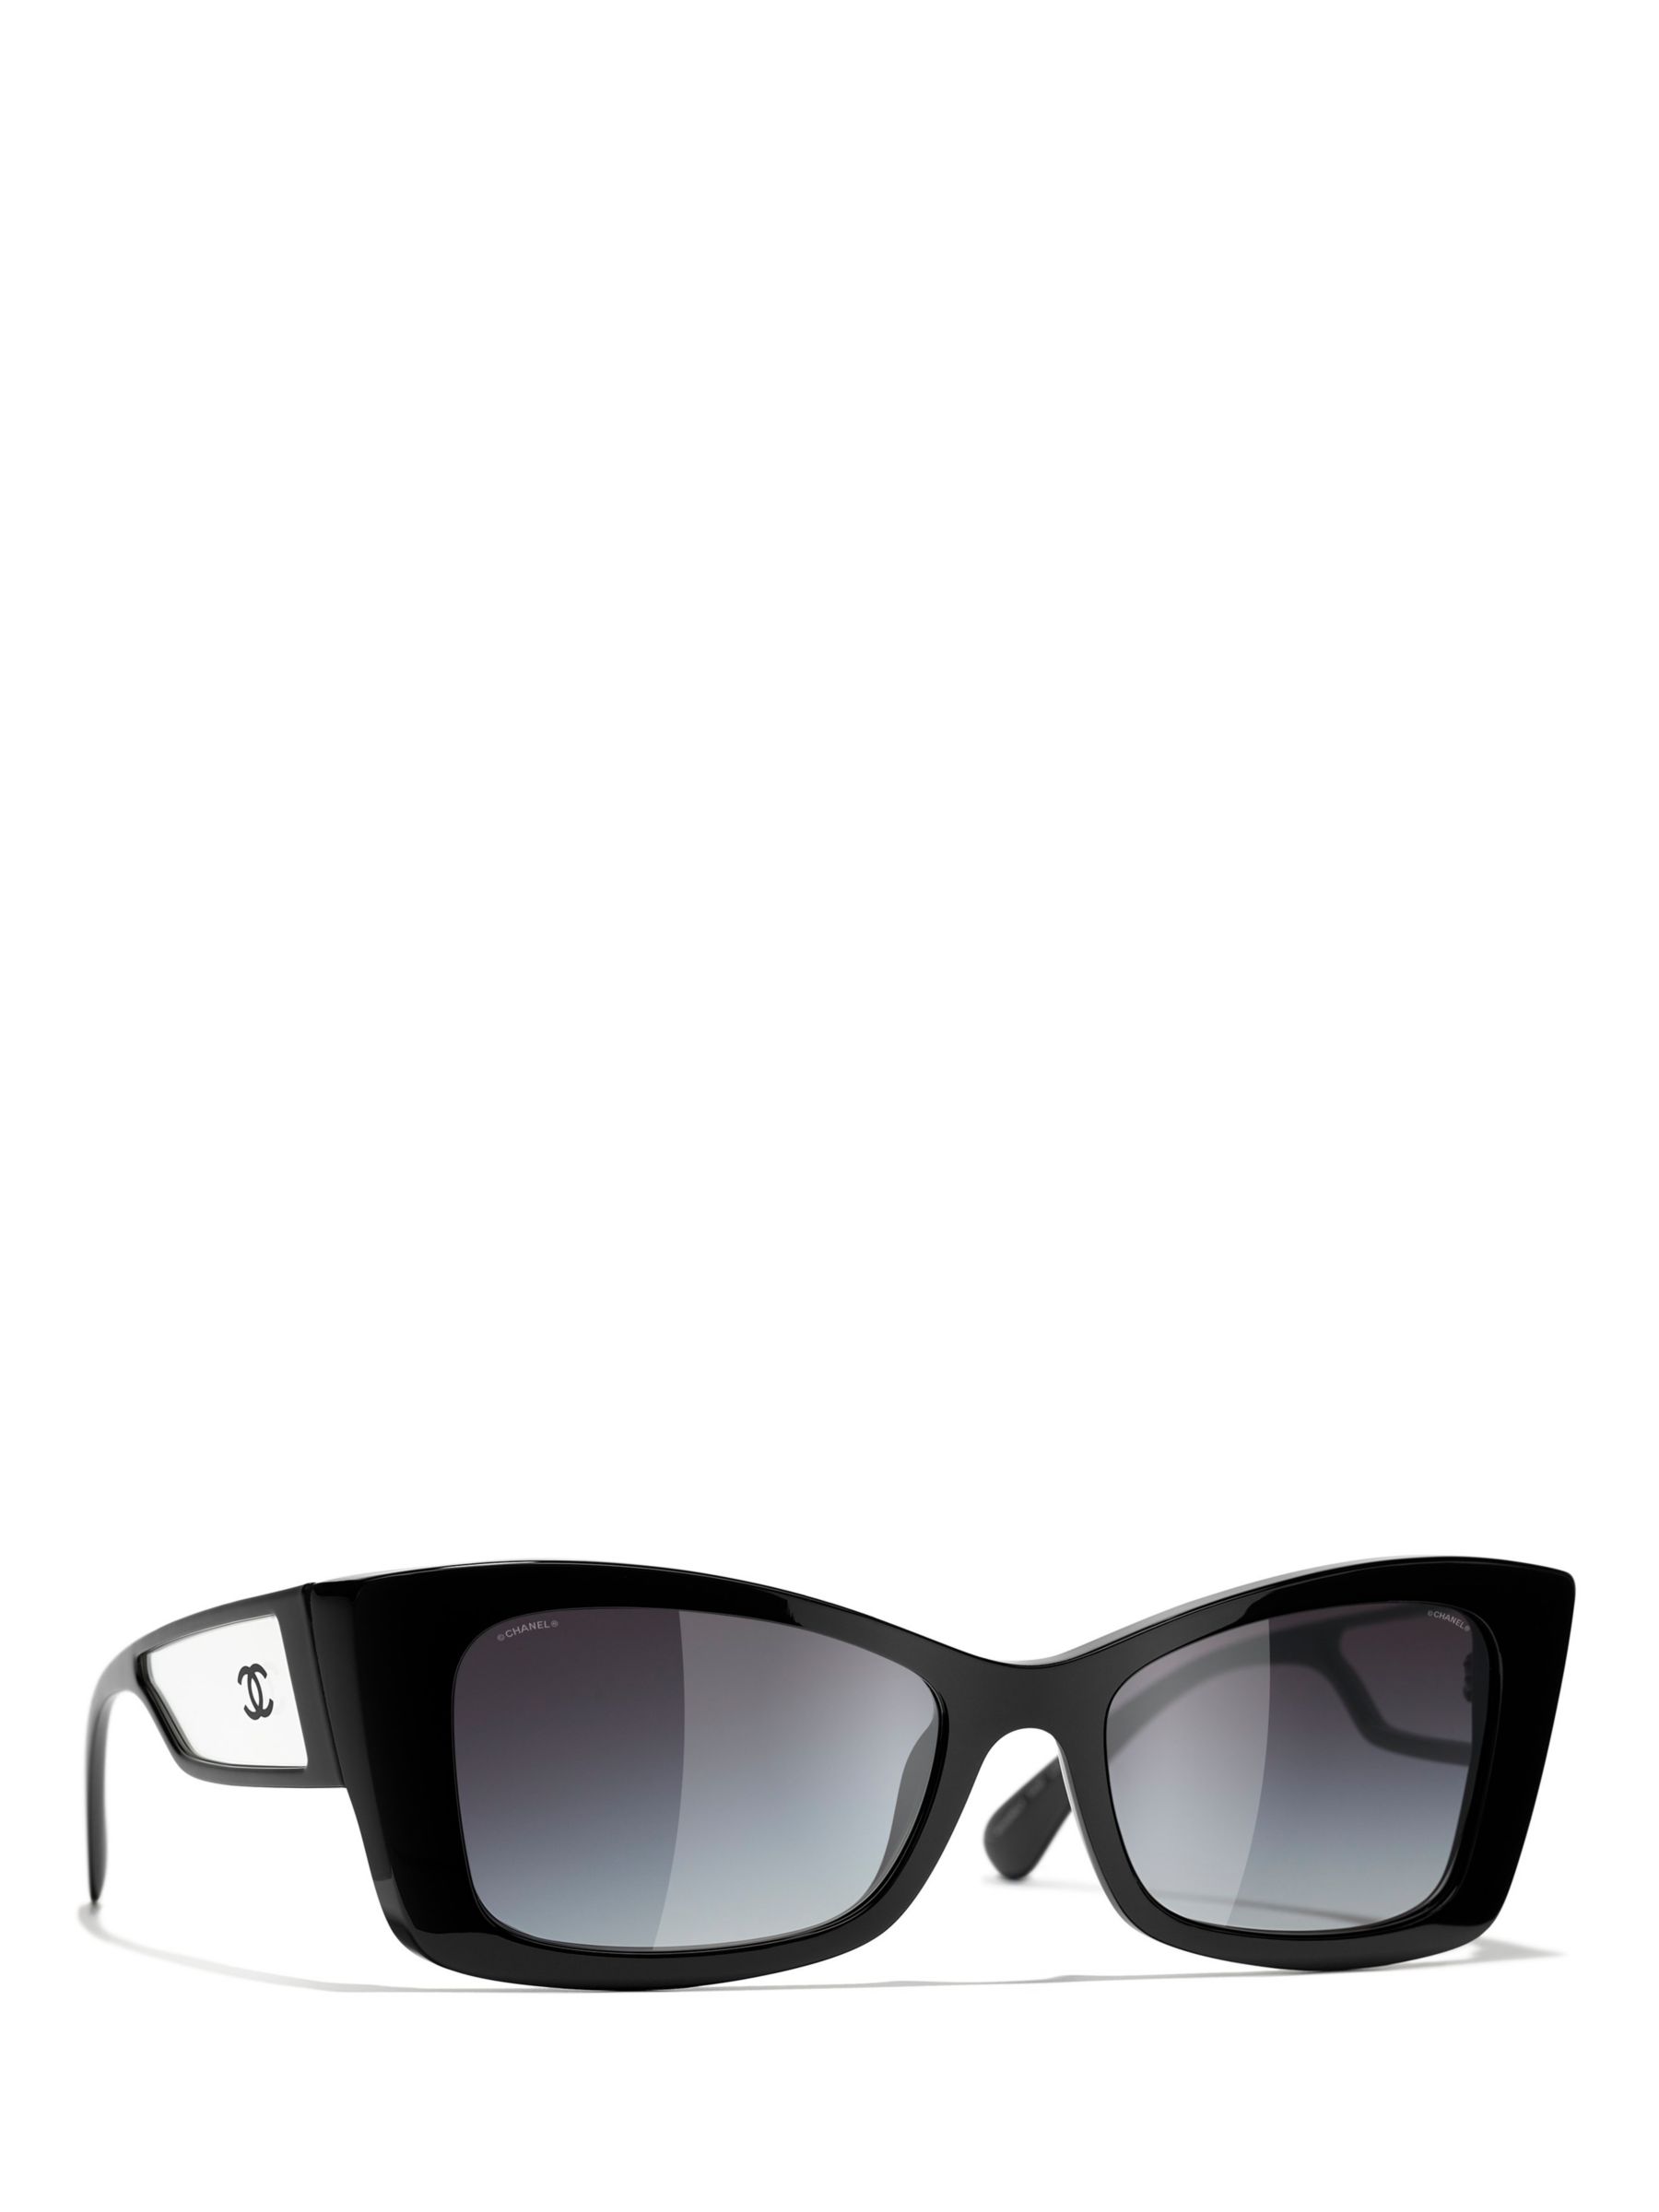 CHANEL Irregular Sunglasses CH5430 Black/Grey Gradient at John